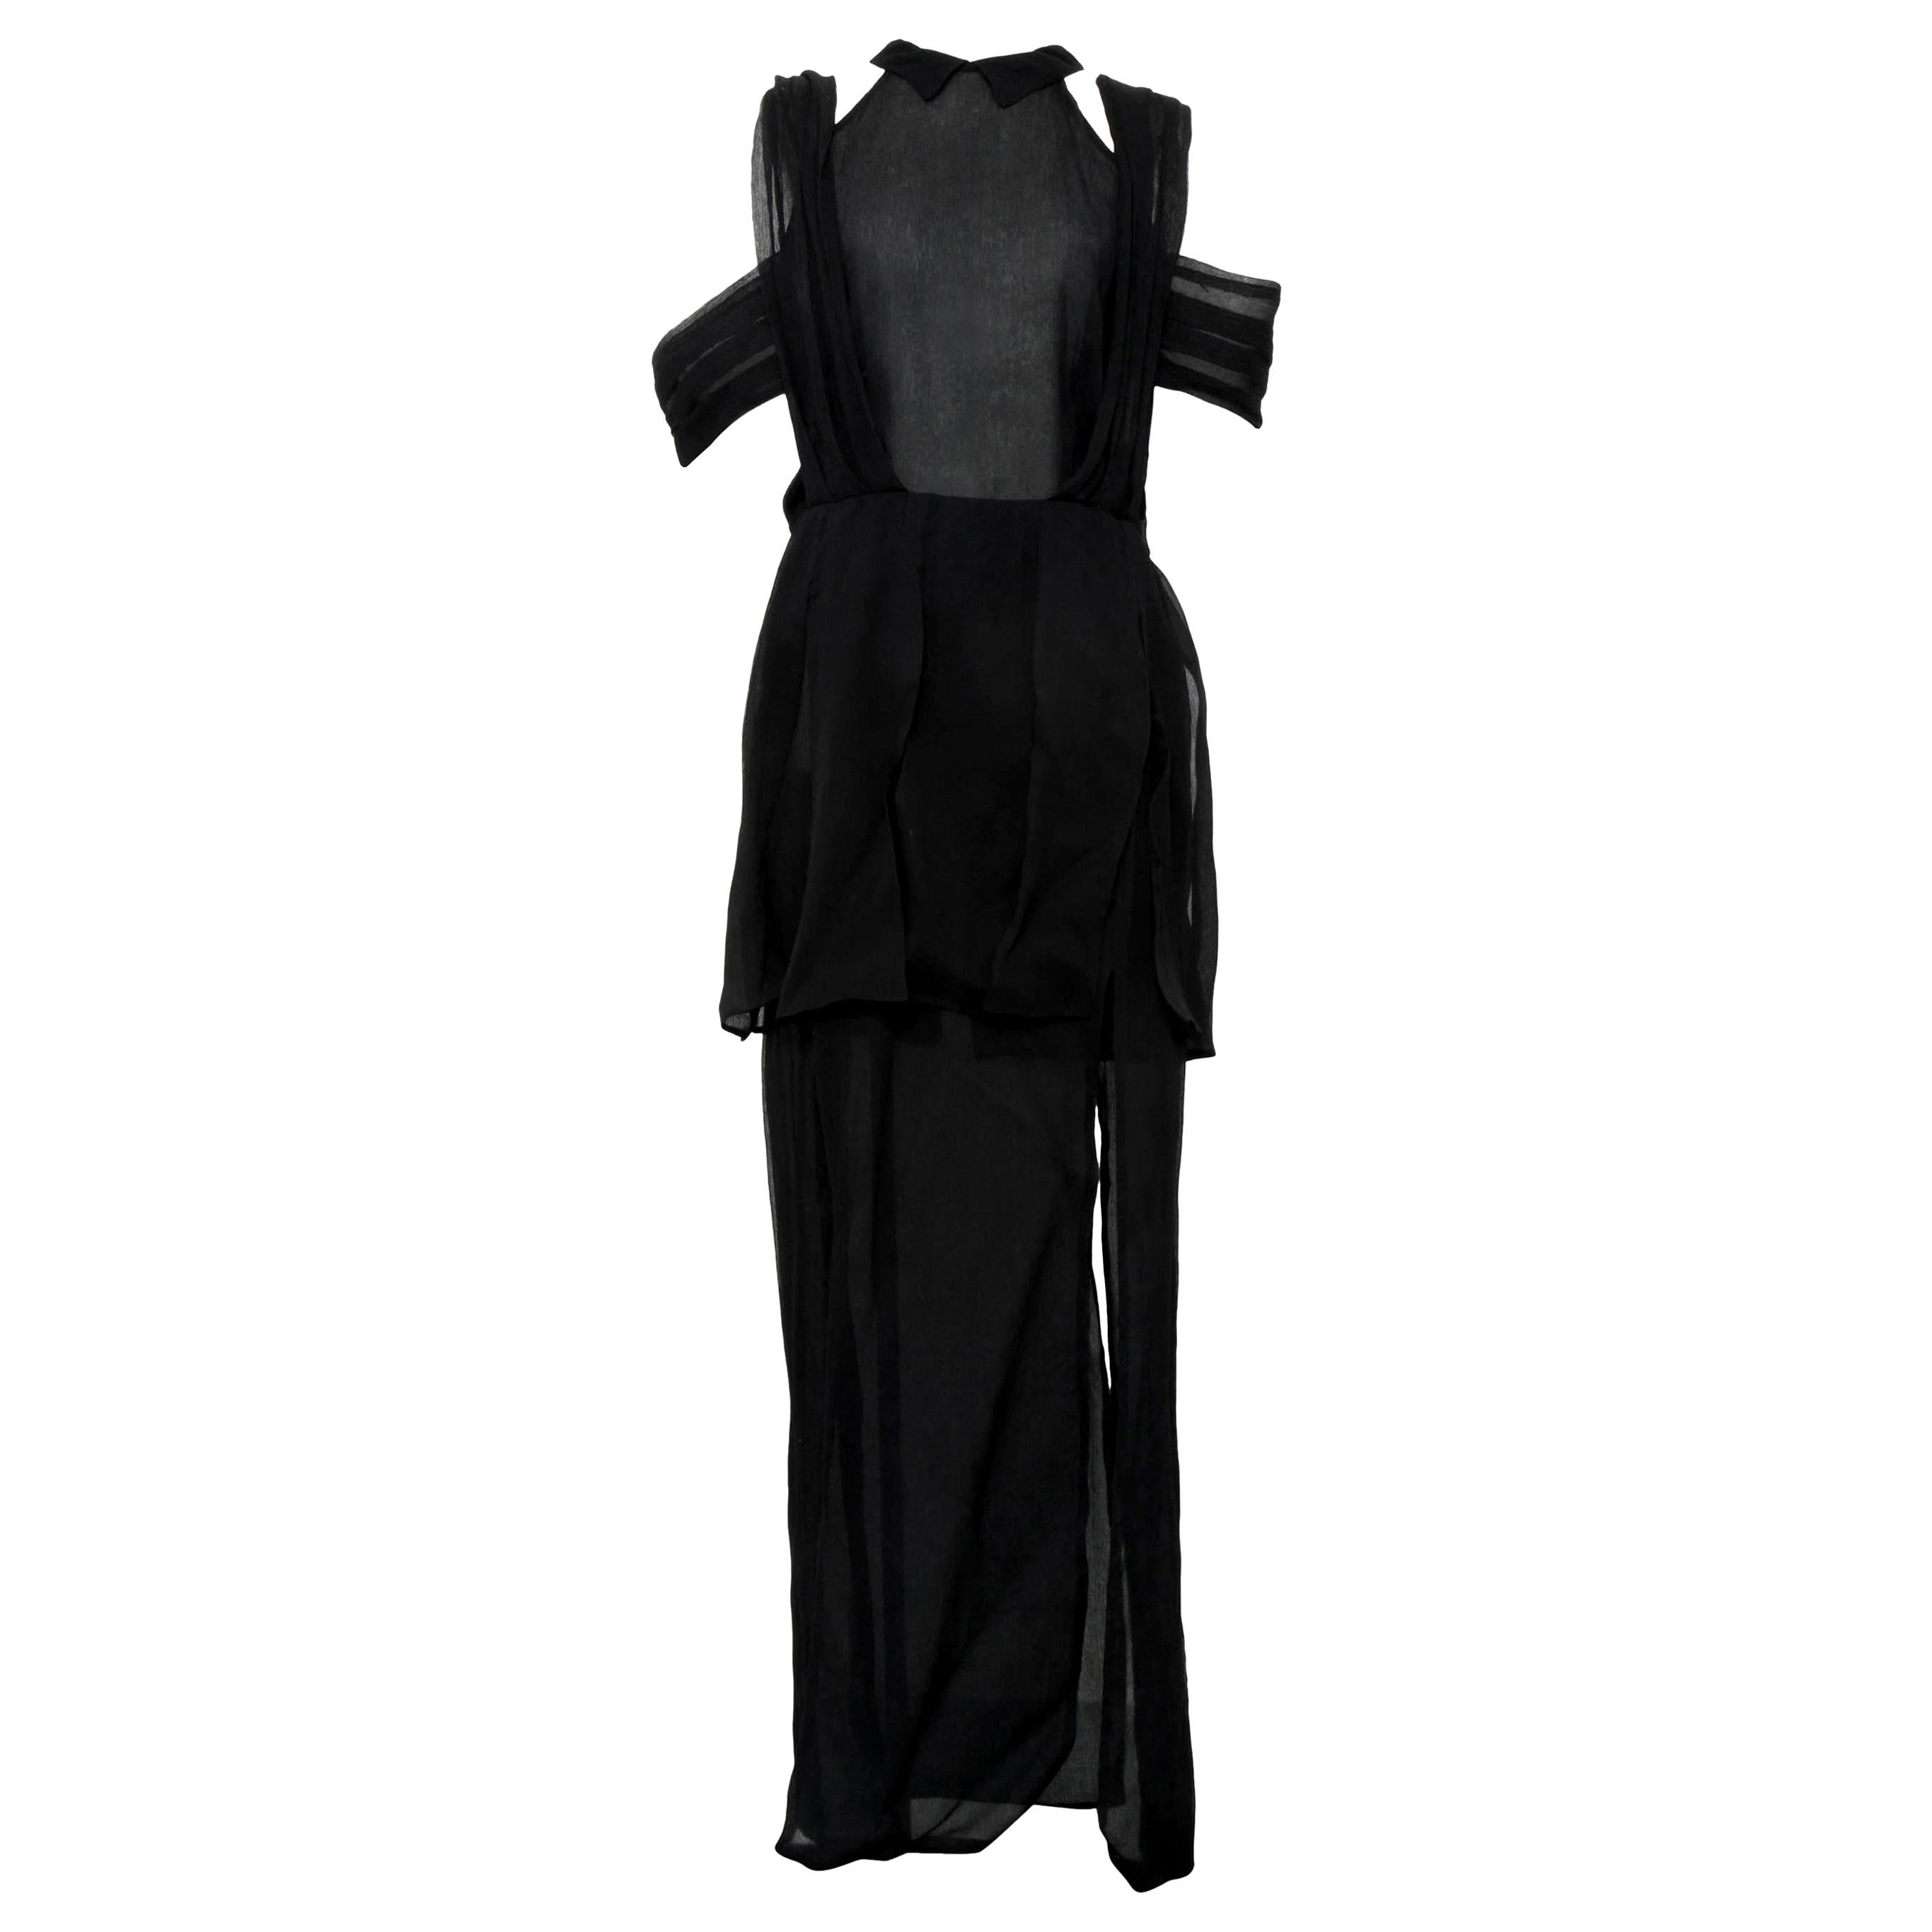 Rodarte Black See-Through Chiffon Gown Dress